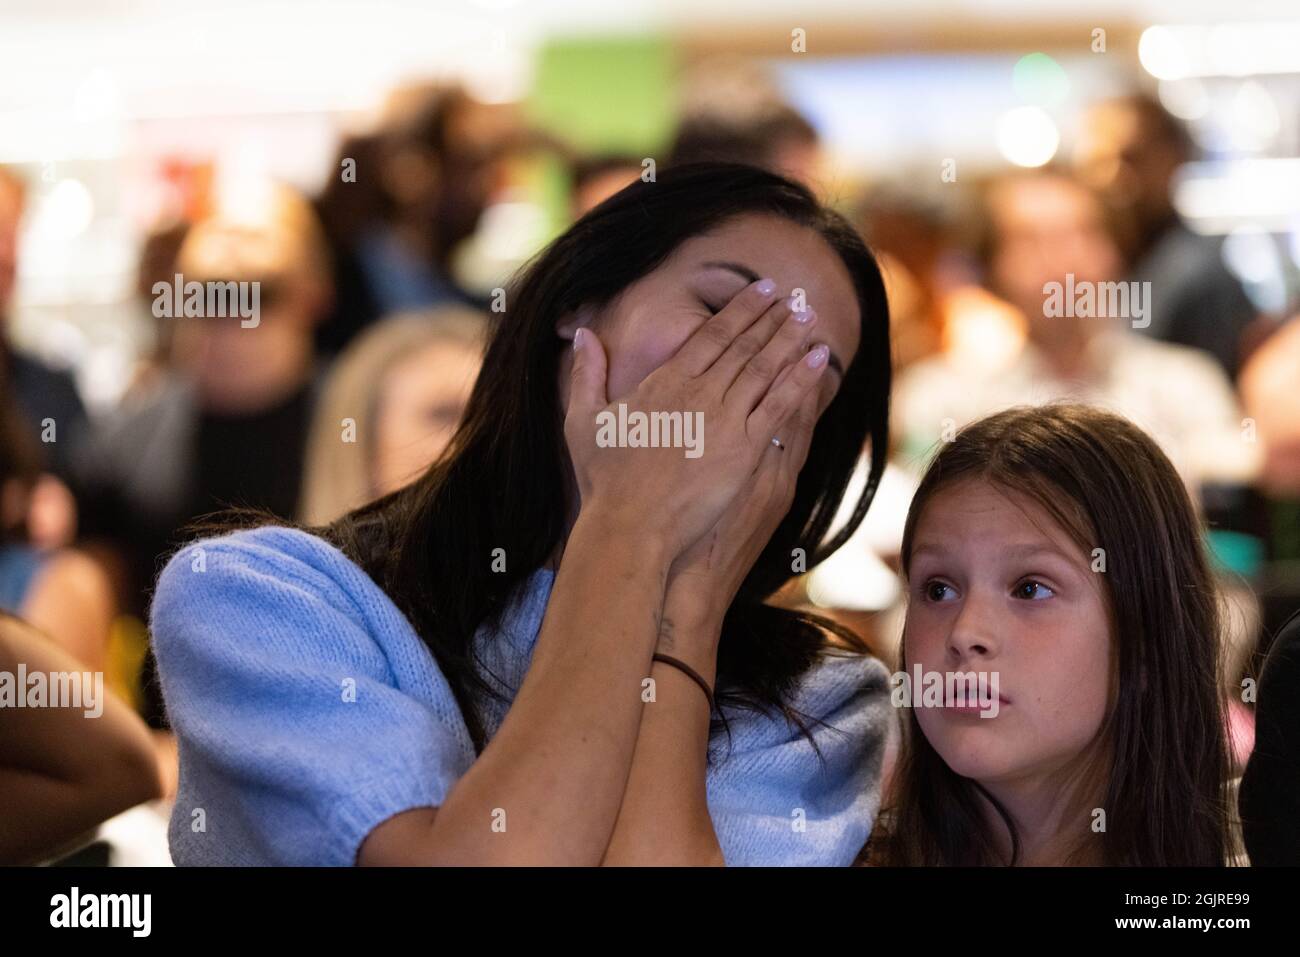 Les gens qui regardent Emma Raducanu prendre sur l'adolescent Leylah Fernandez dans la finale de l'US Open au Parklangley Club, Beckenham. Date de la photo: Samedi 11 septembre 2021. Banque D'Images